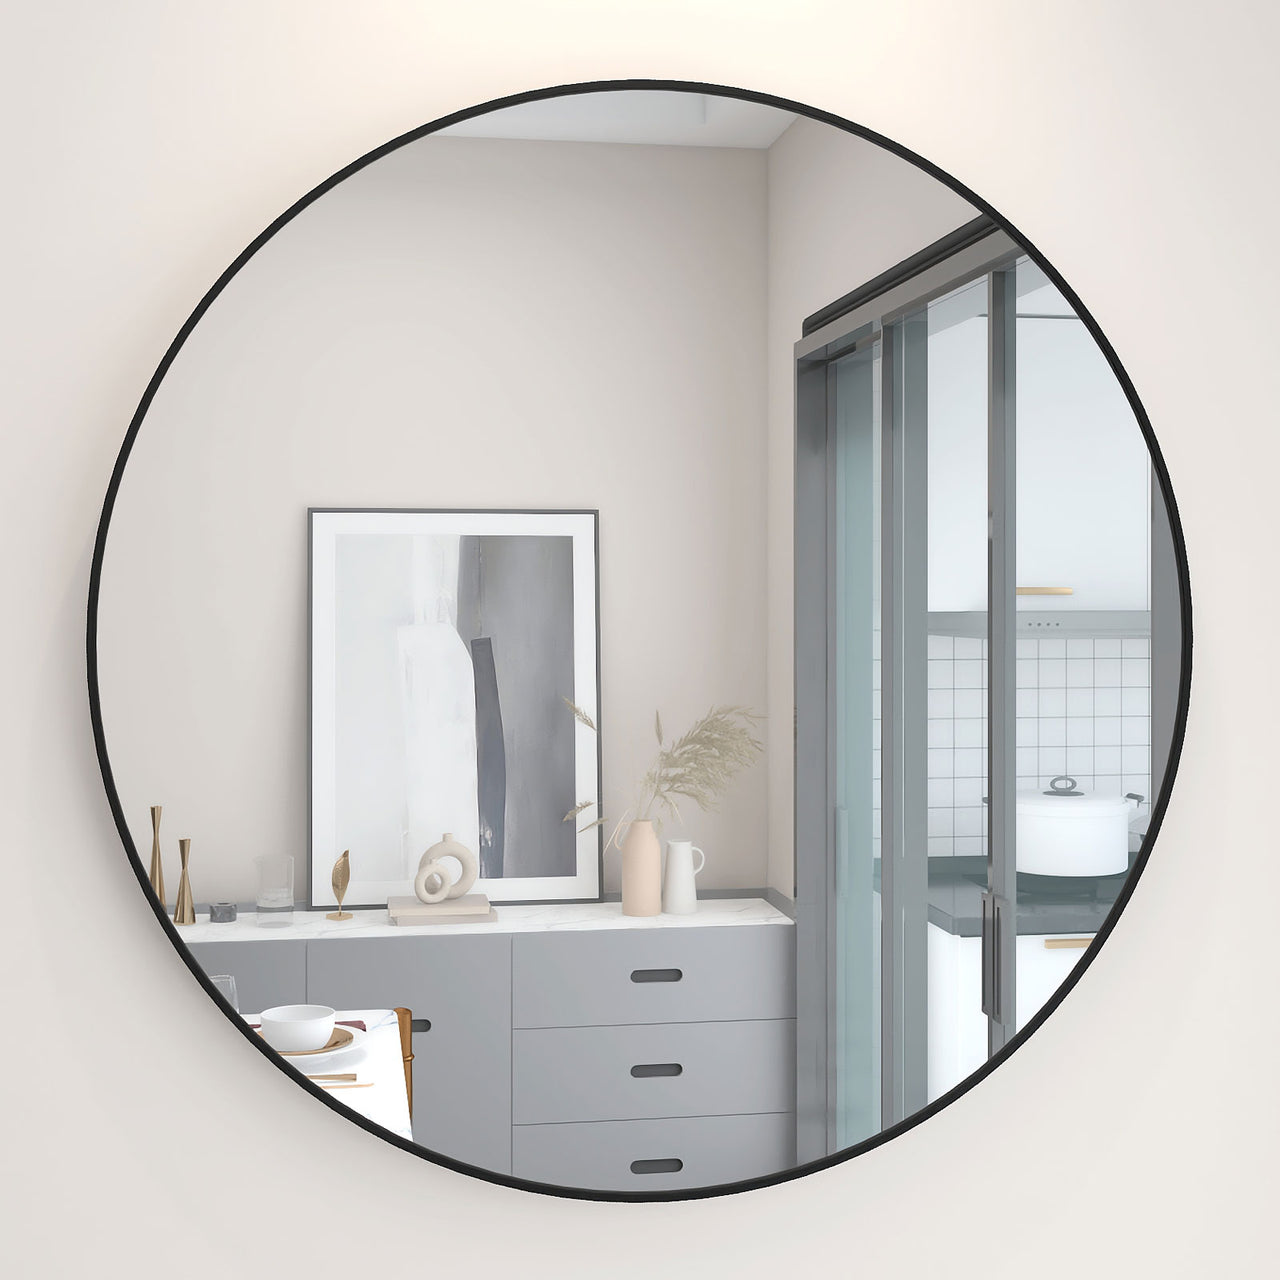 32& Wall Circle Mirror Large Round Black Farmhouse Circular Mirror for Wall Decor Big Bathroom Make Up Vanity Mirror Entryway Mirror